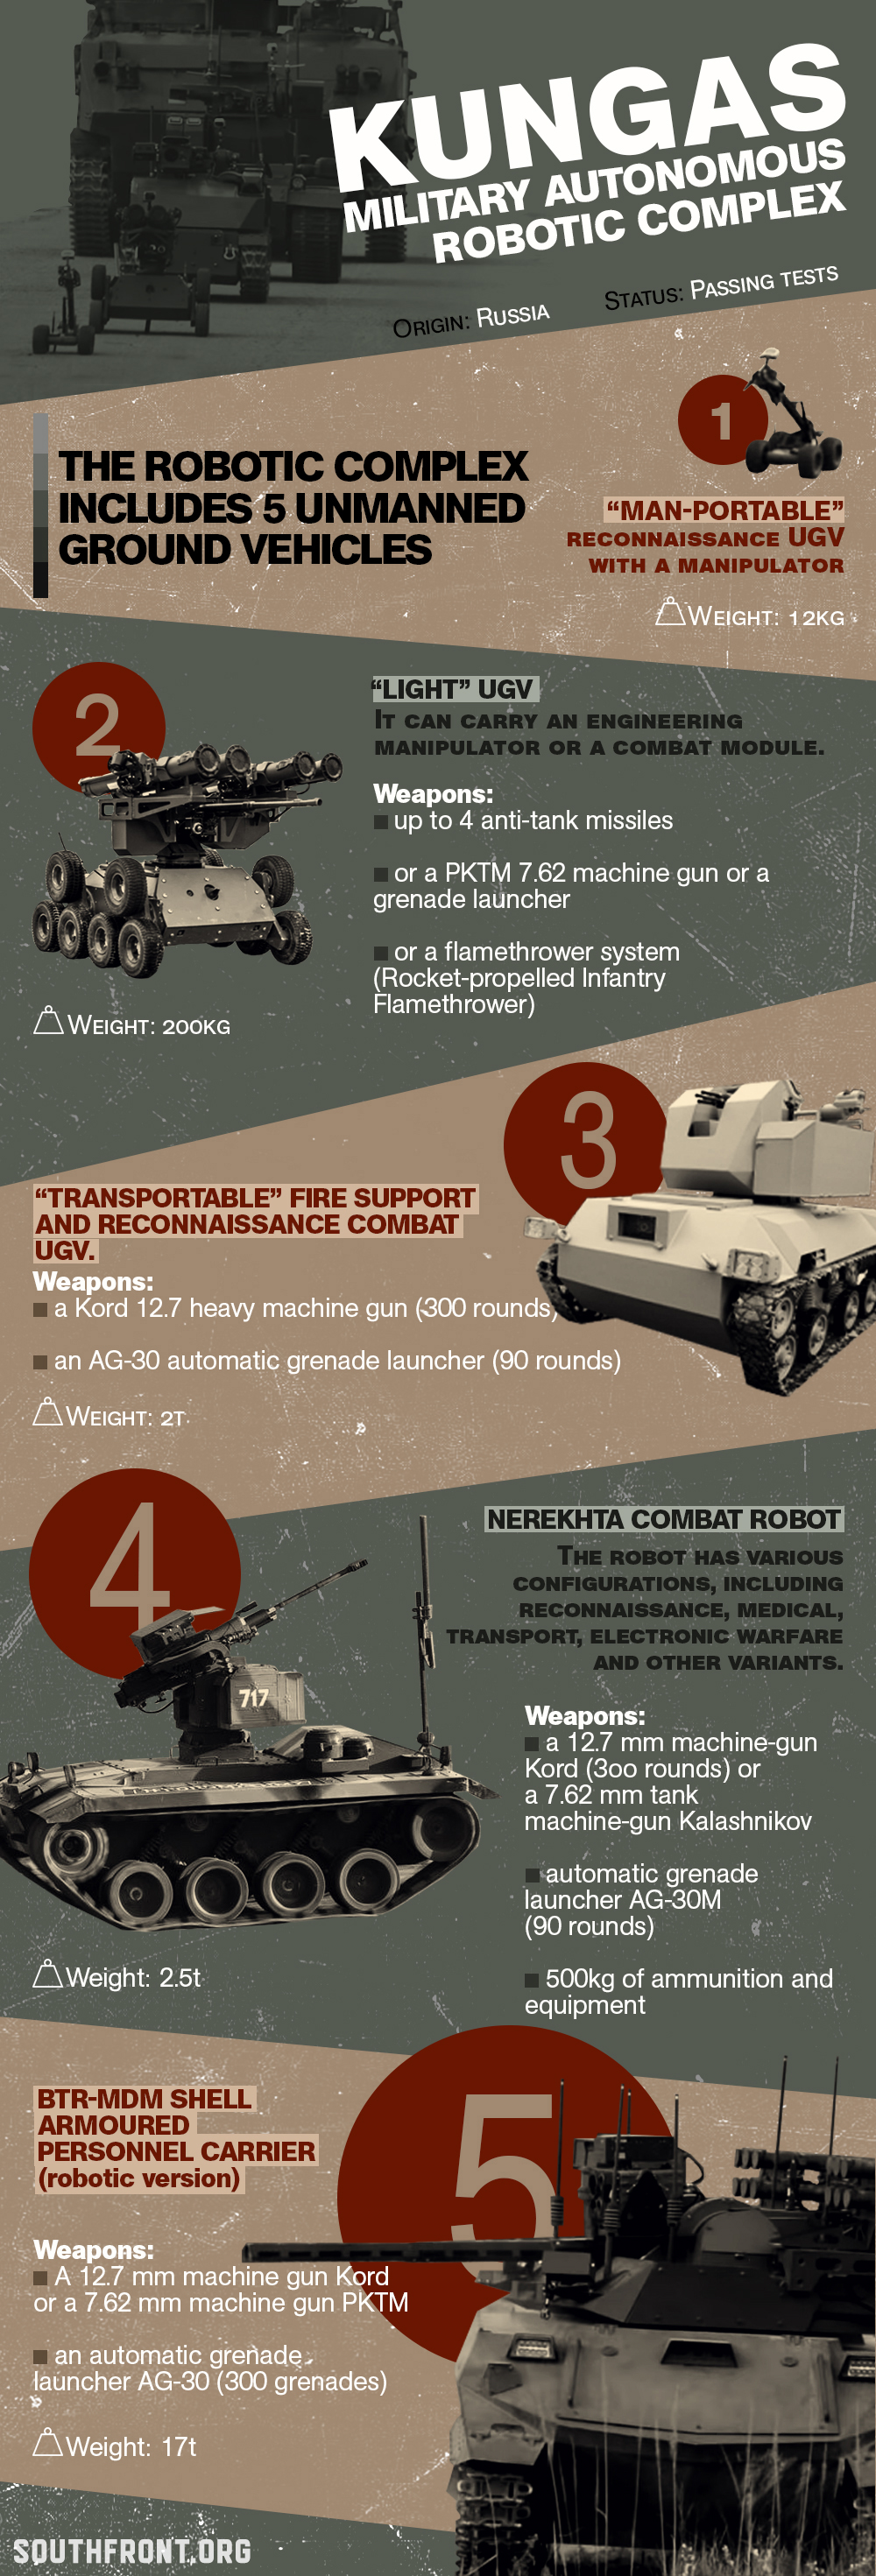 Russia's Military Autonomous Robotic Complex “Kungas” (Infographics)